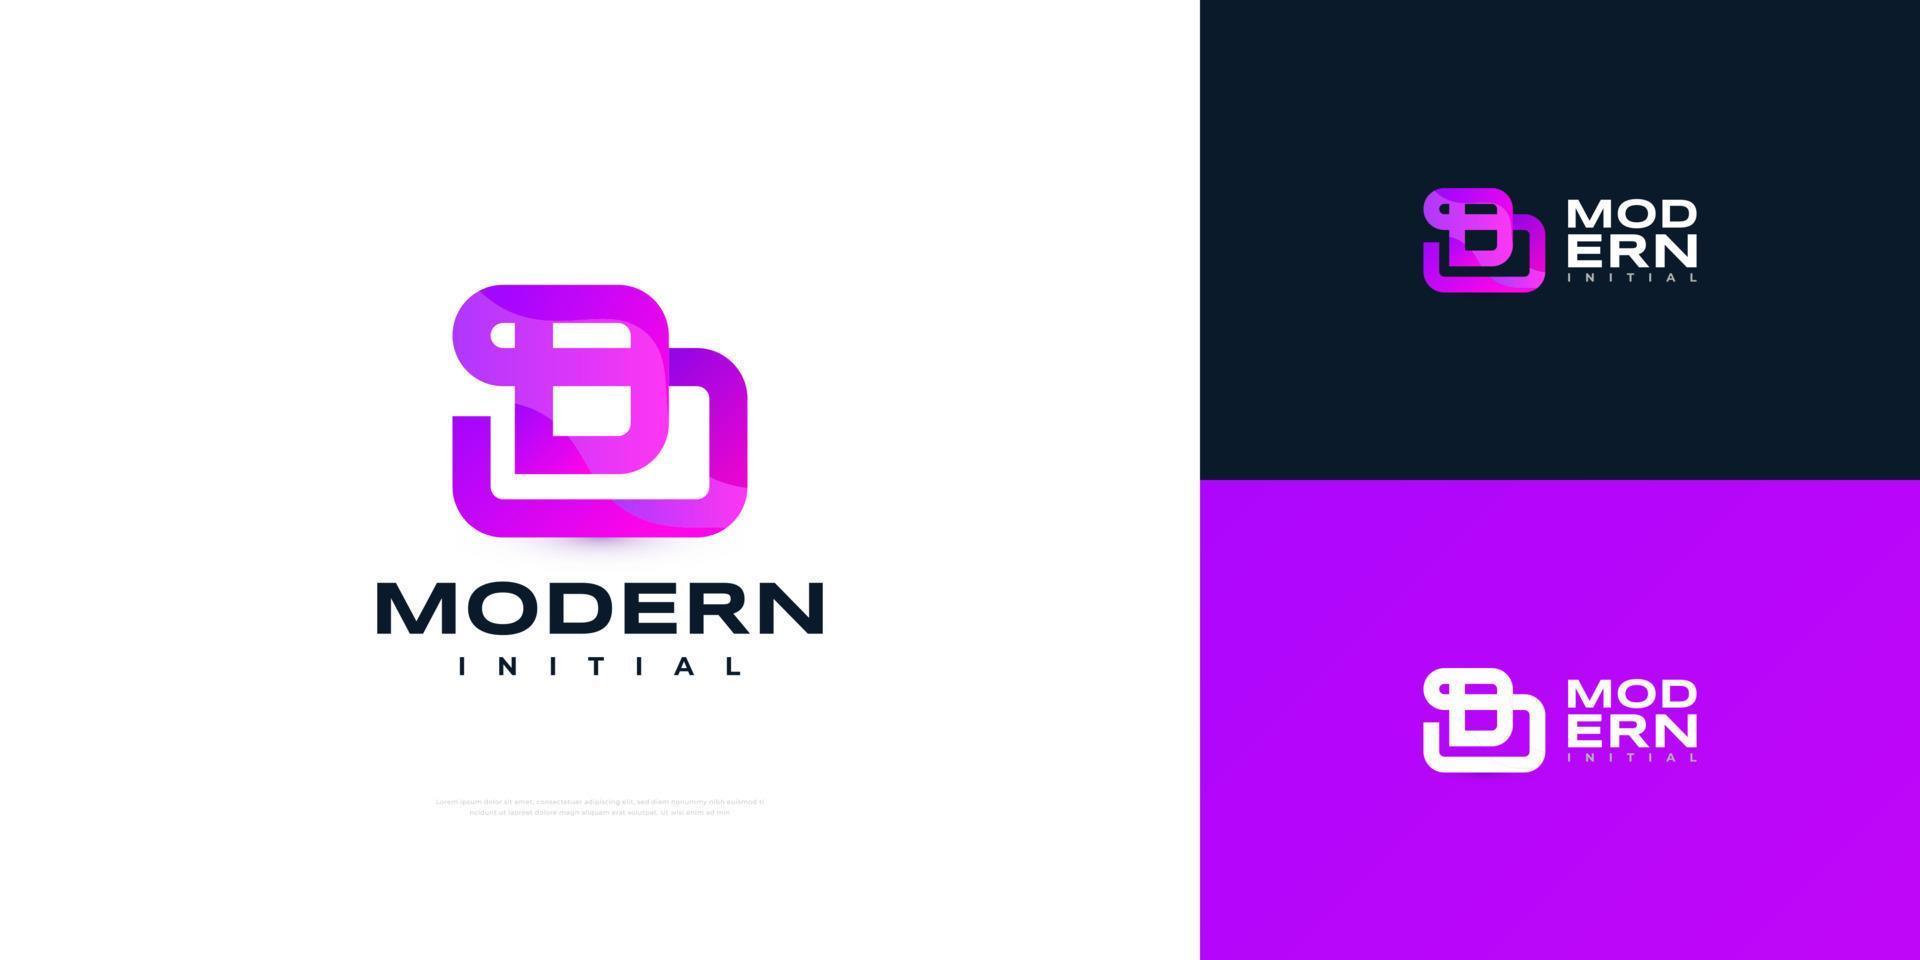 bd-monogramm-logo-design im modernen farbverlaufsstil. bd- oder db-anfangslogo im purpurroten verlaufskonzept vektor